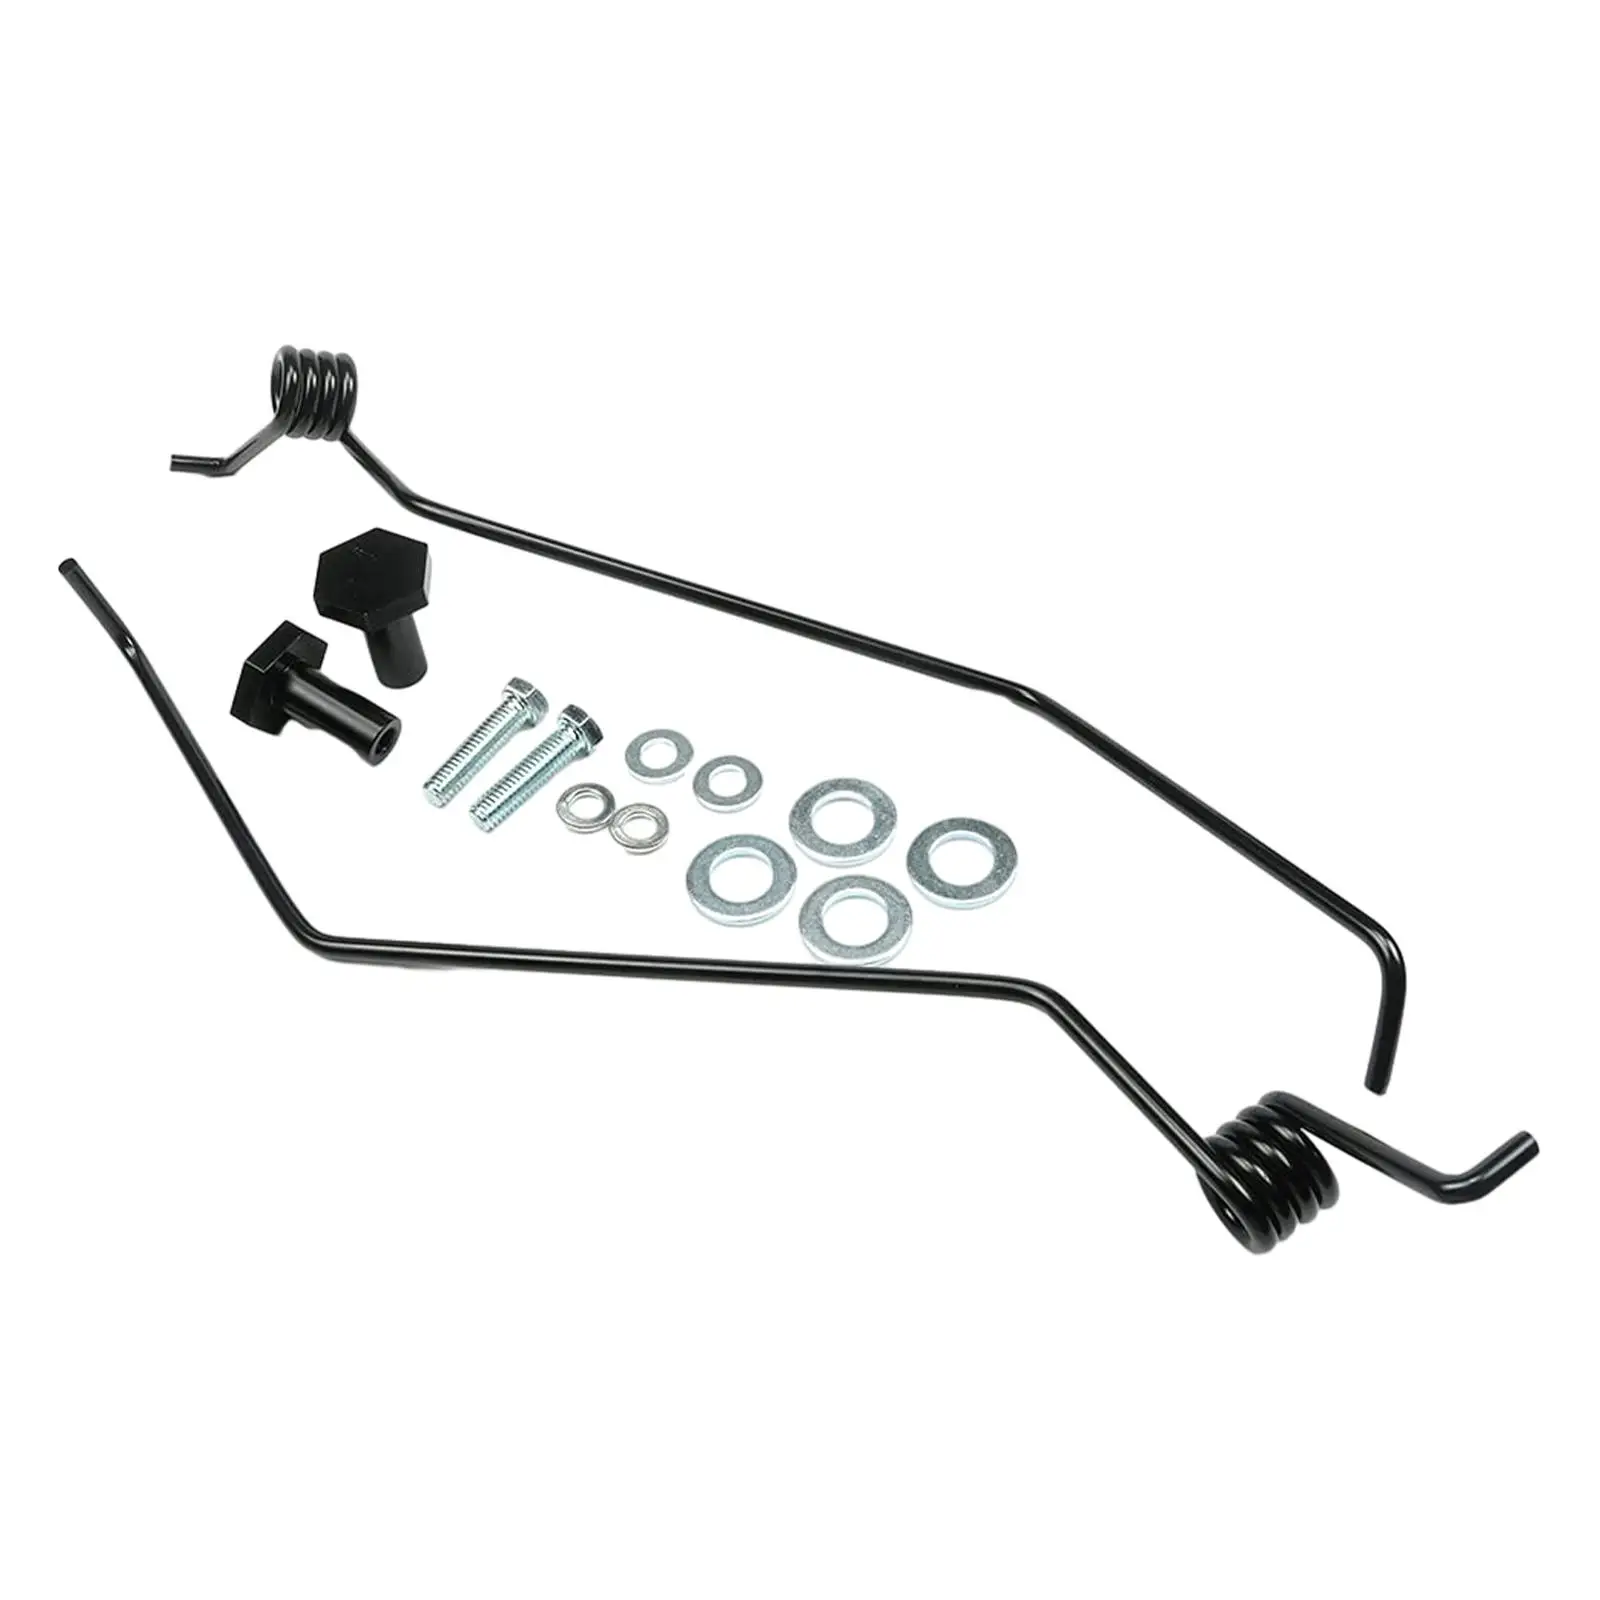 Snowmobile Ice Snow Scratchers Kit High Performance Premium Automotive Accessory 4E565768 for Vehicle Universal Spare Parts